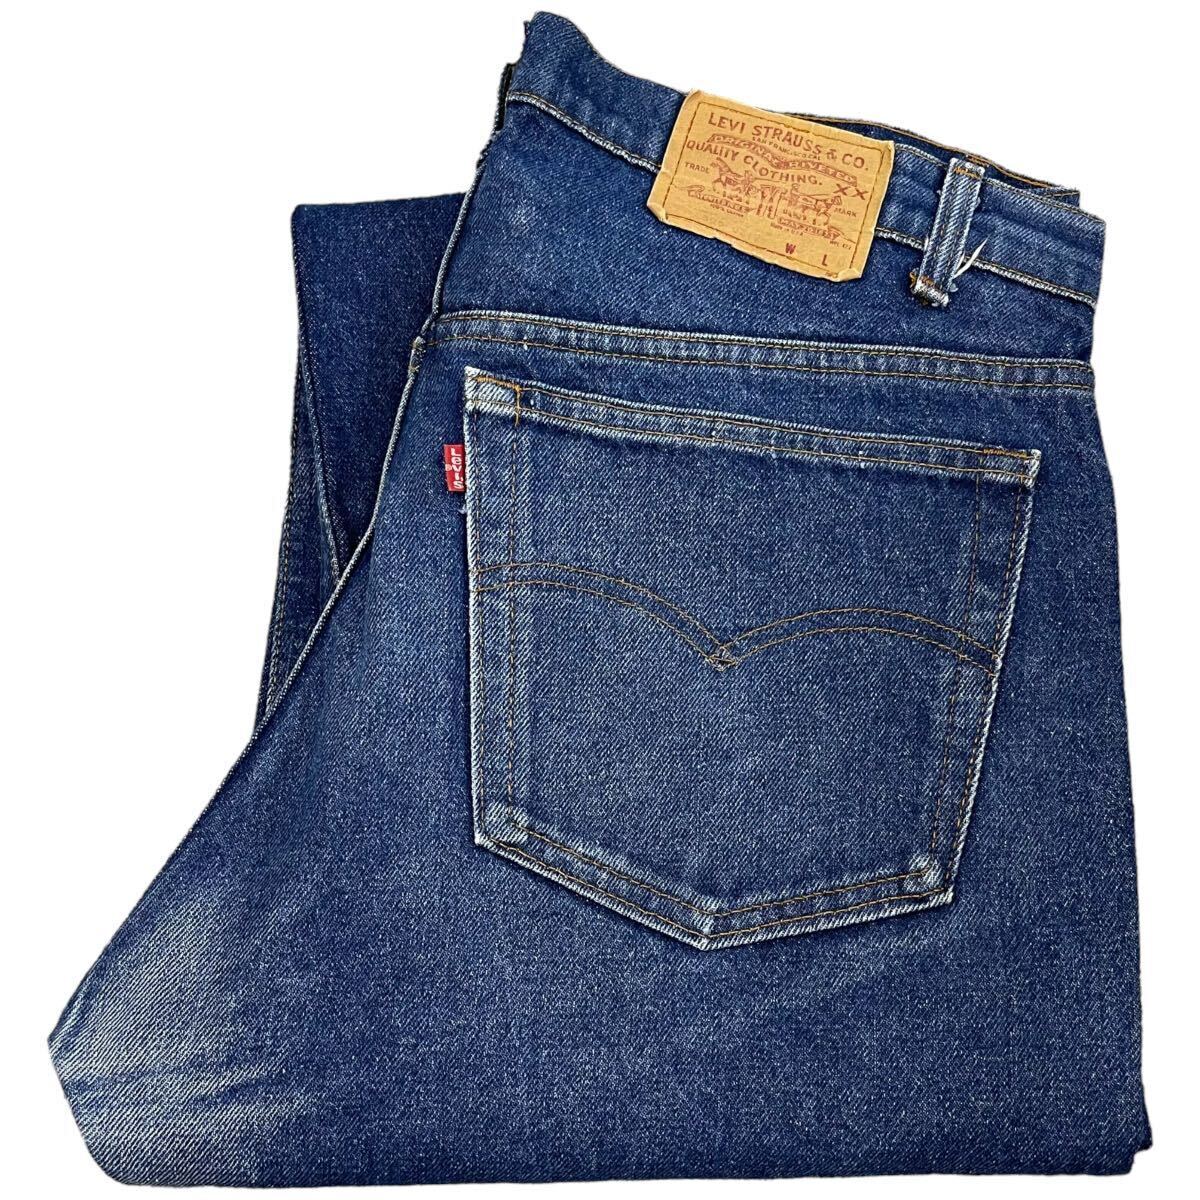 90s USA made Levi*s Denim pants 505-0217 jeans ji- bread G bread strut Levis Levi's Vintage 